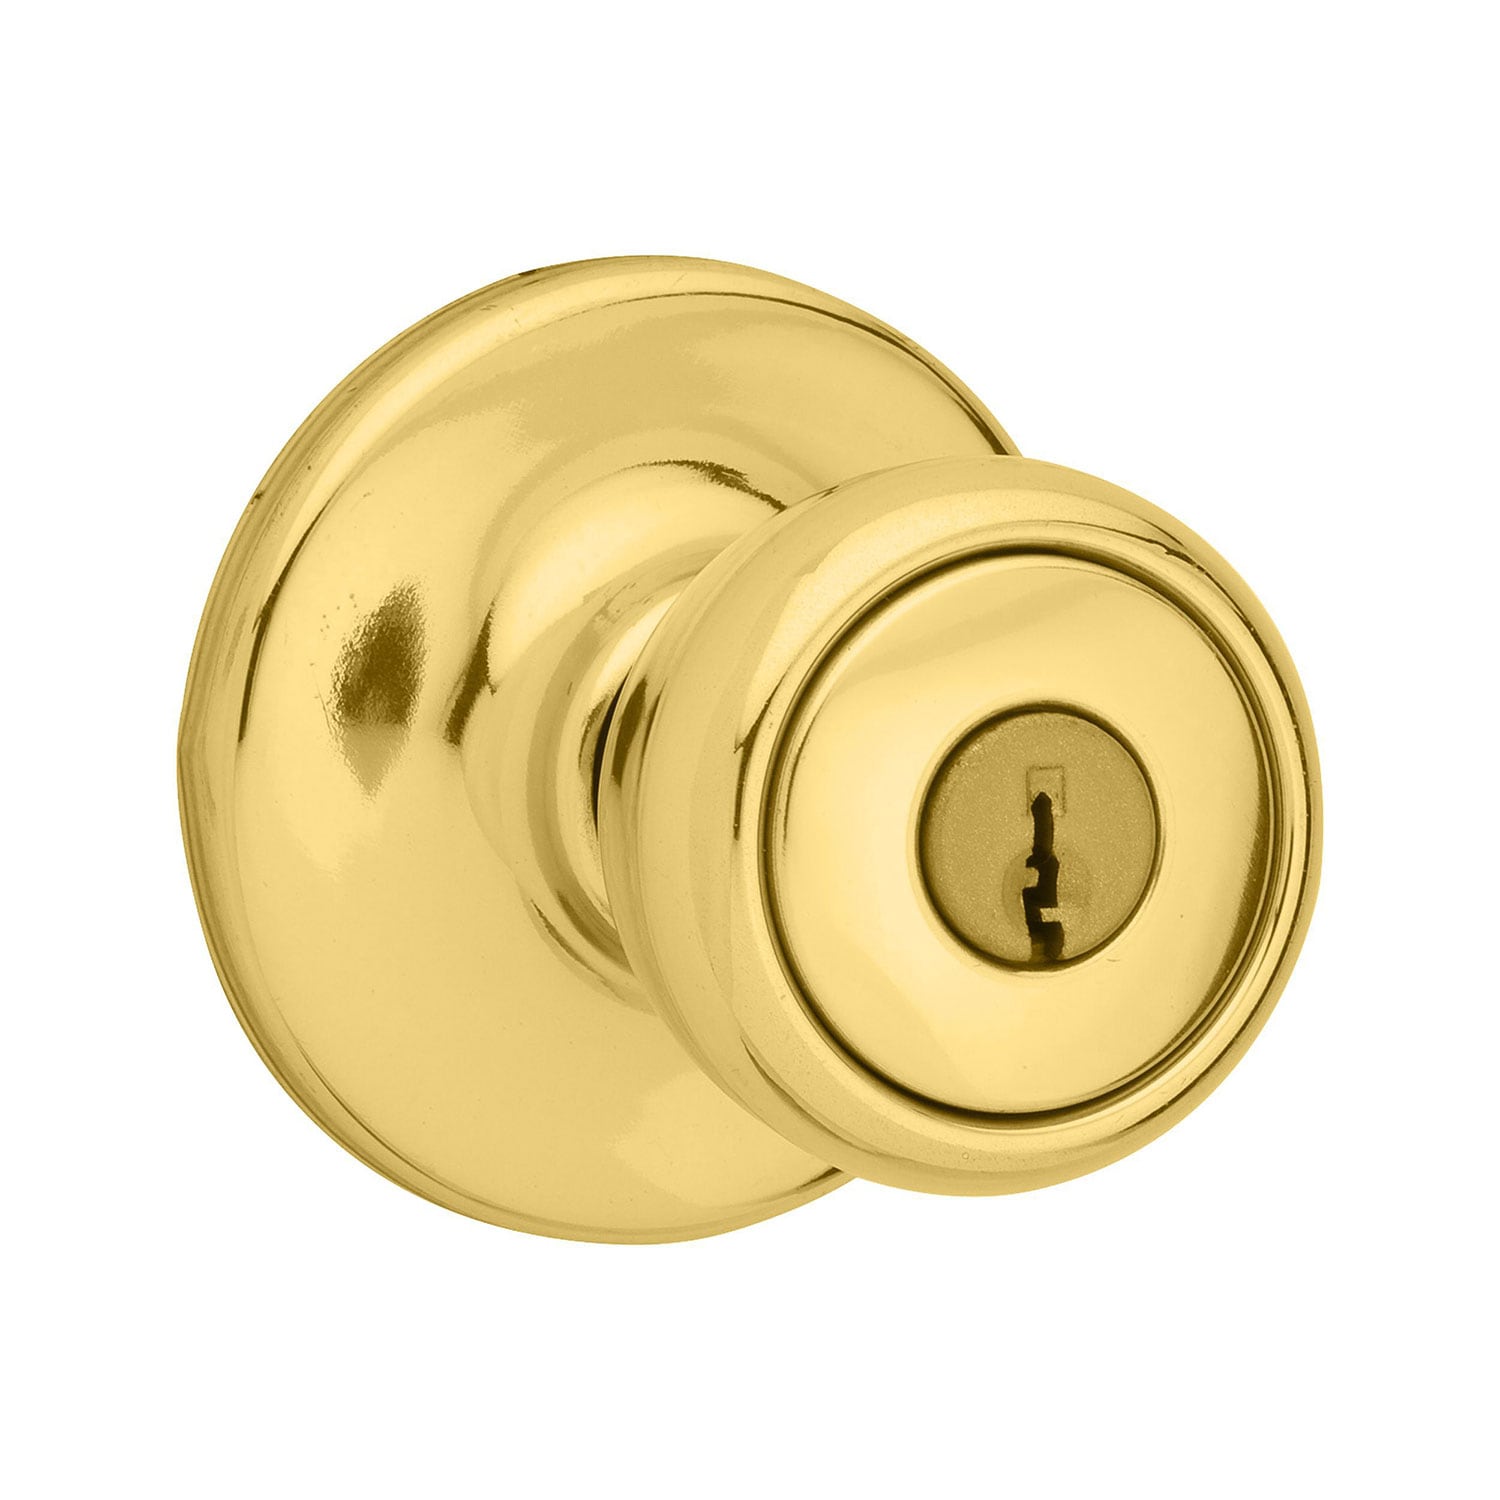 Mobile Home Locking Exterior Entrance Door Knob Polished Brass Gold with 2 keys 